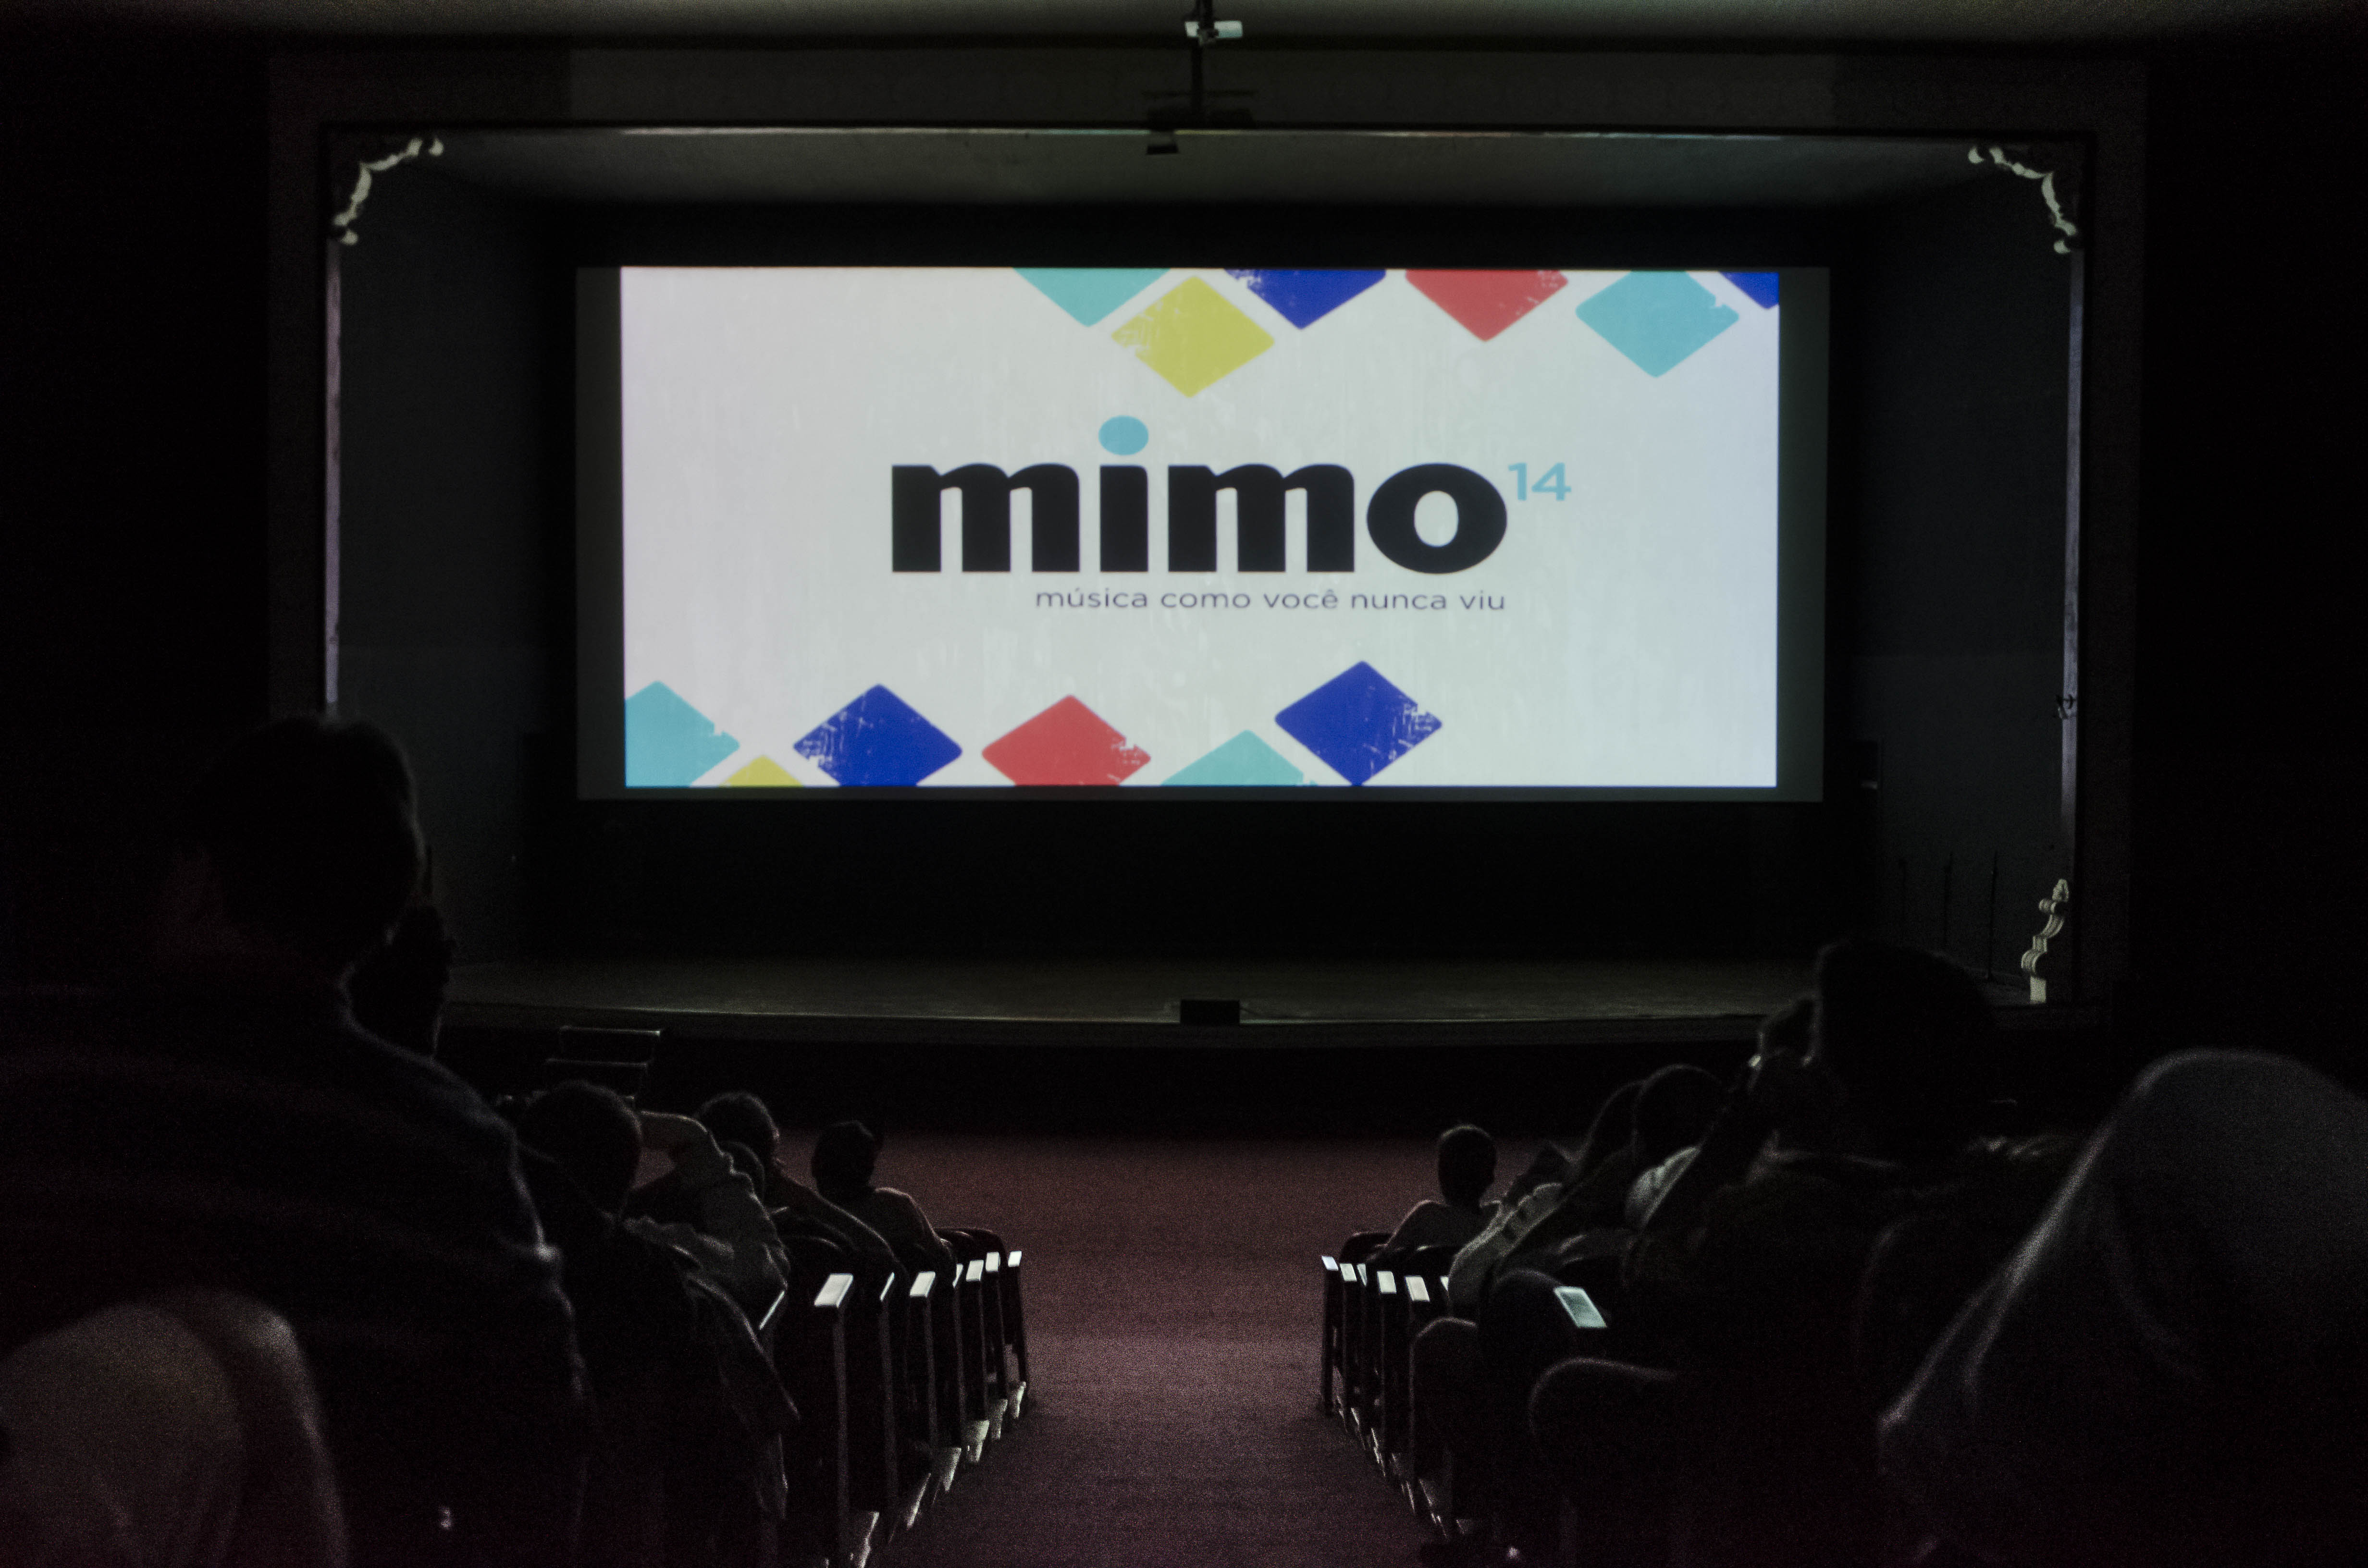 Festival de Cinema do Mimo